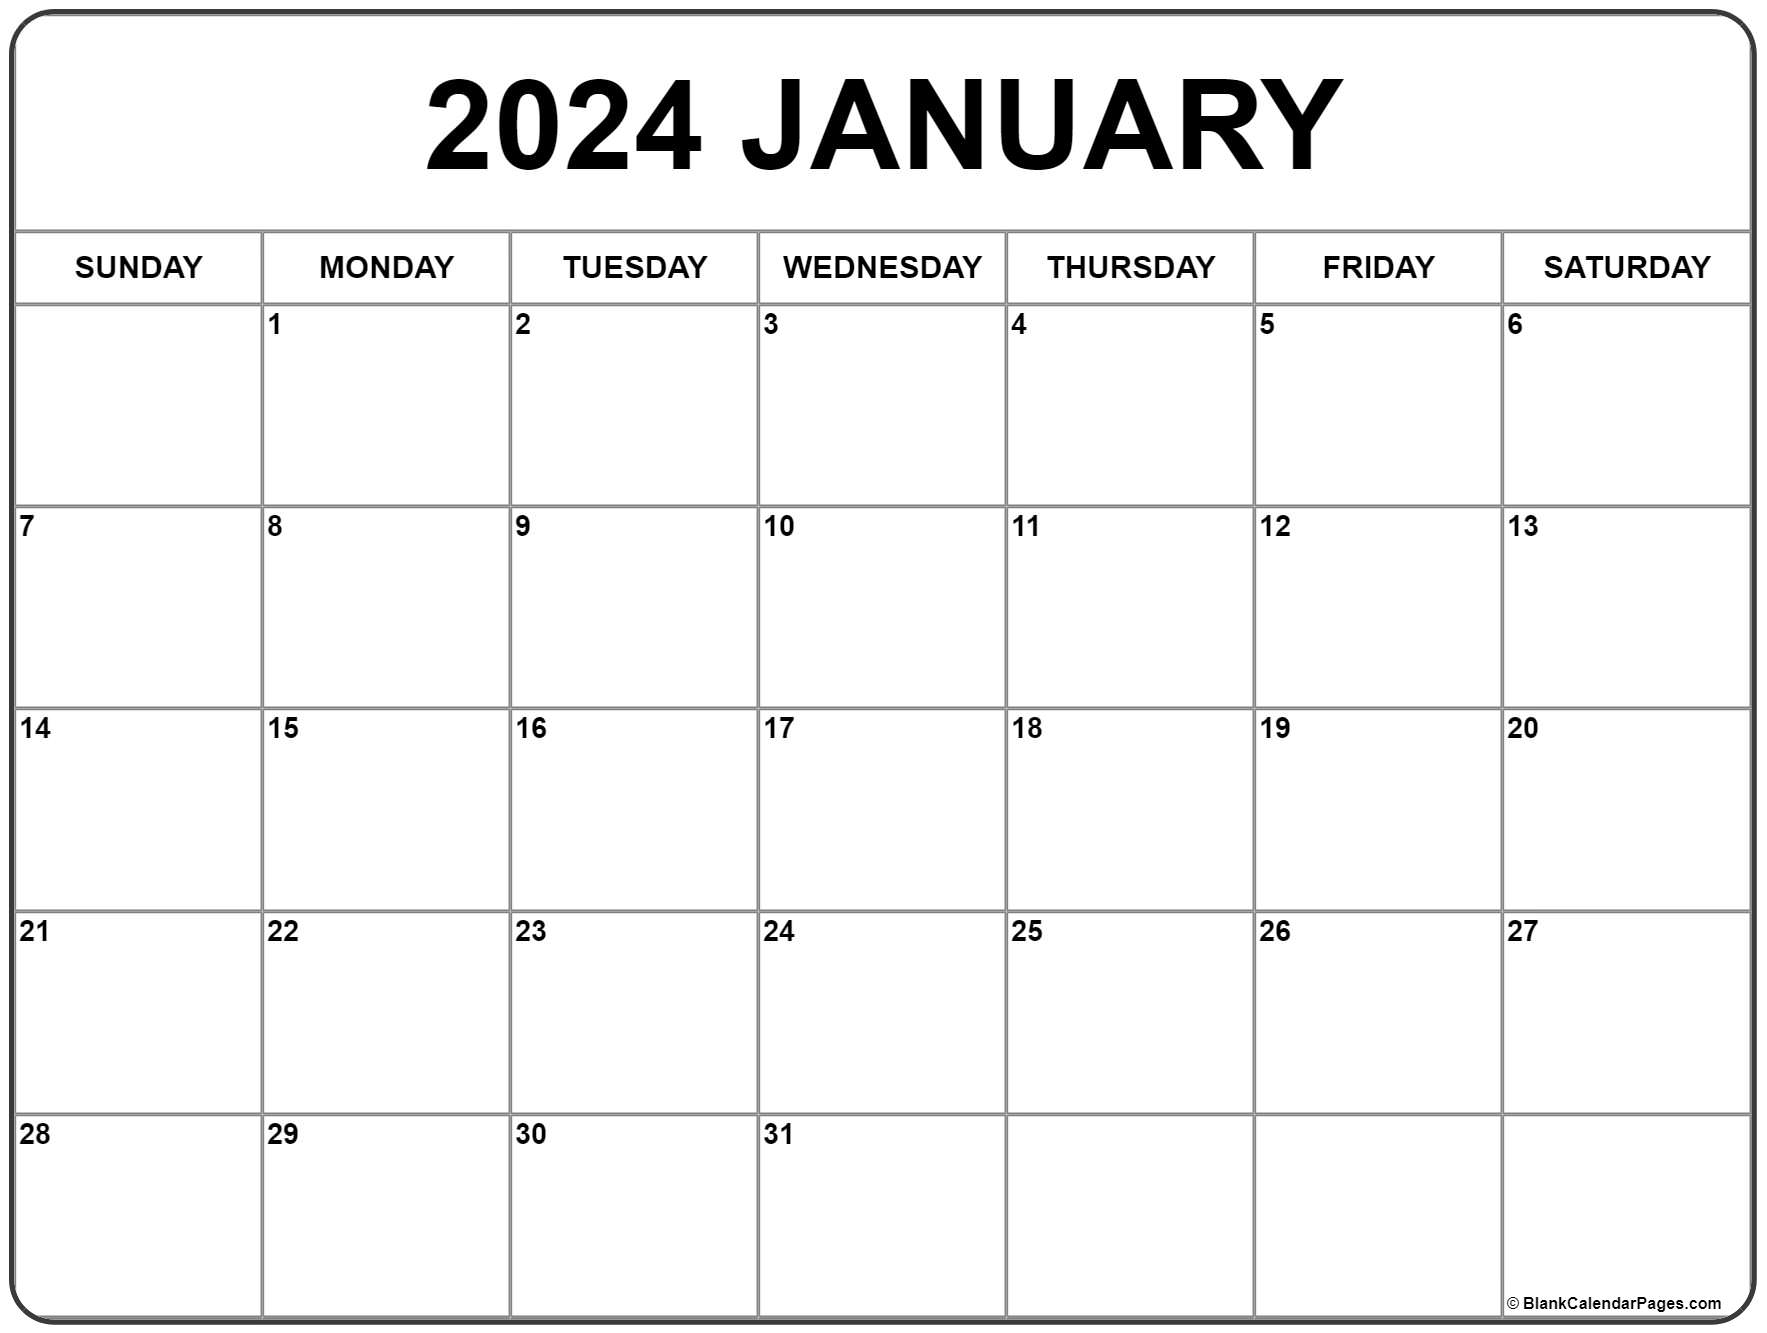 January 2021 calendar | free printable calendar templates